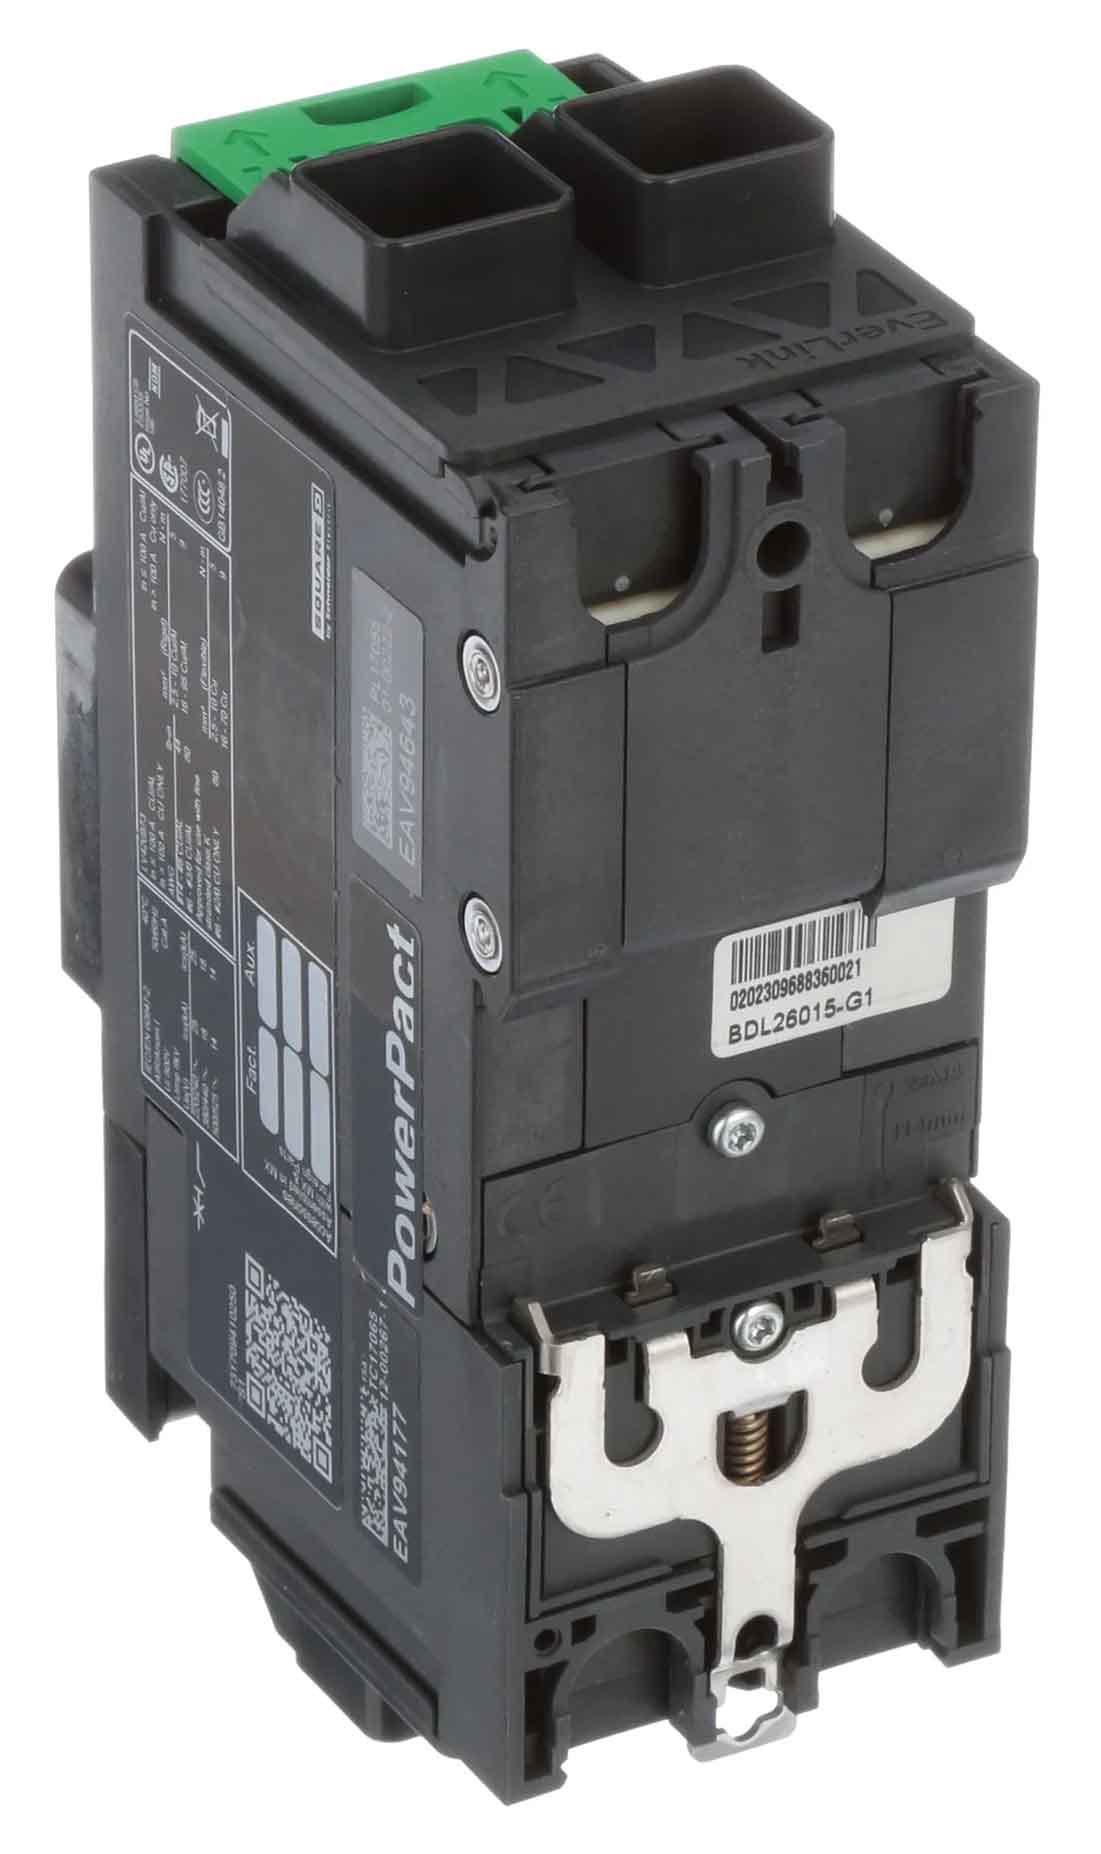 BDL26020 - Square D - Molded Case Circuit Breaker